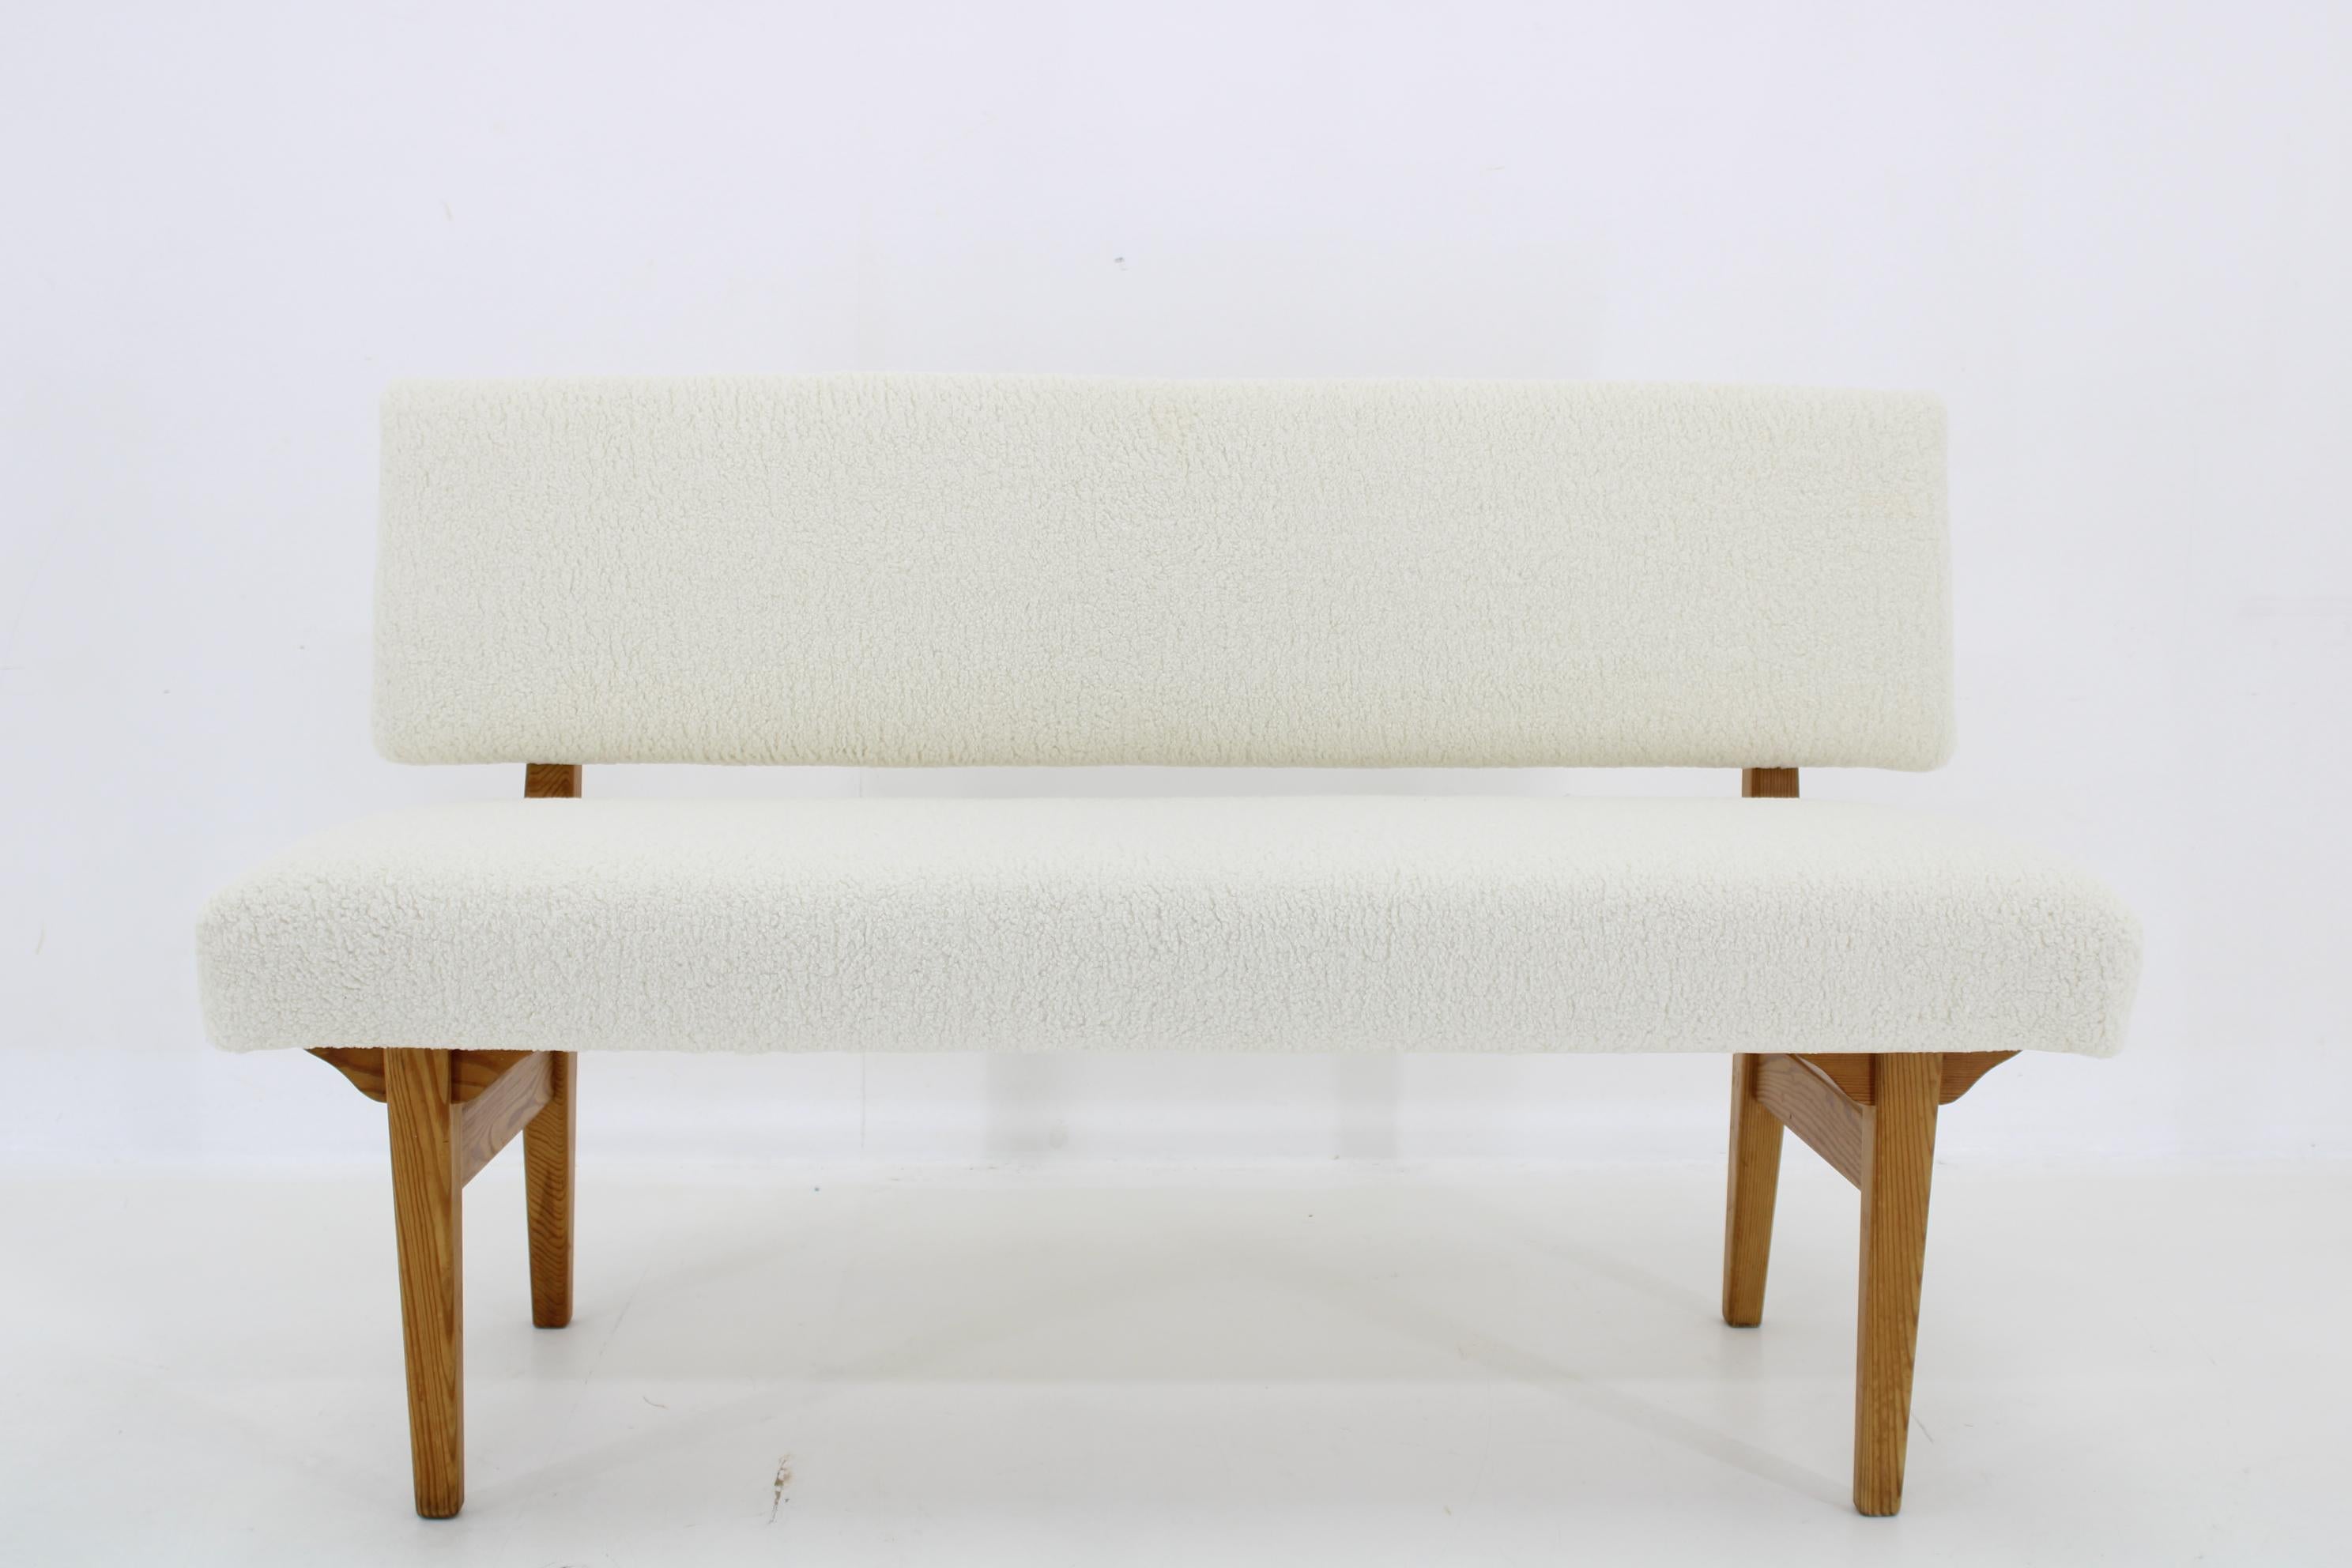 - carefully refurbished
- newly upholstered in synthetic sheepskin fabric